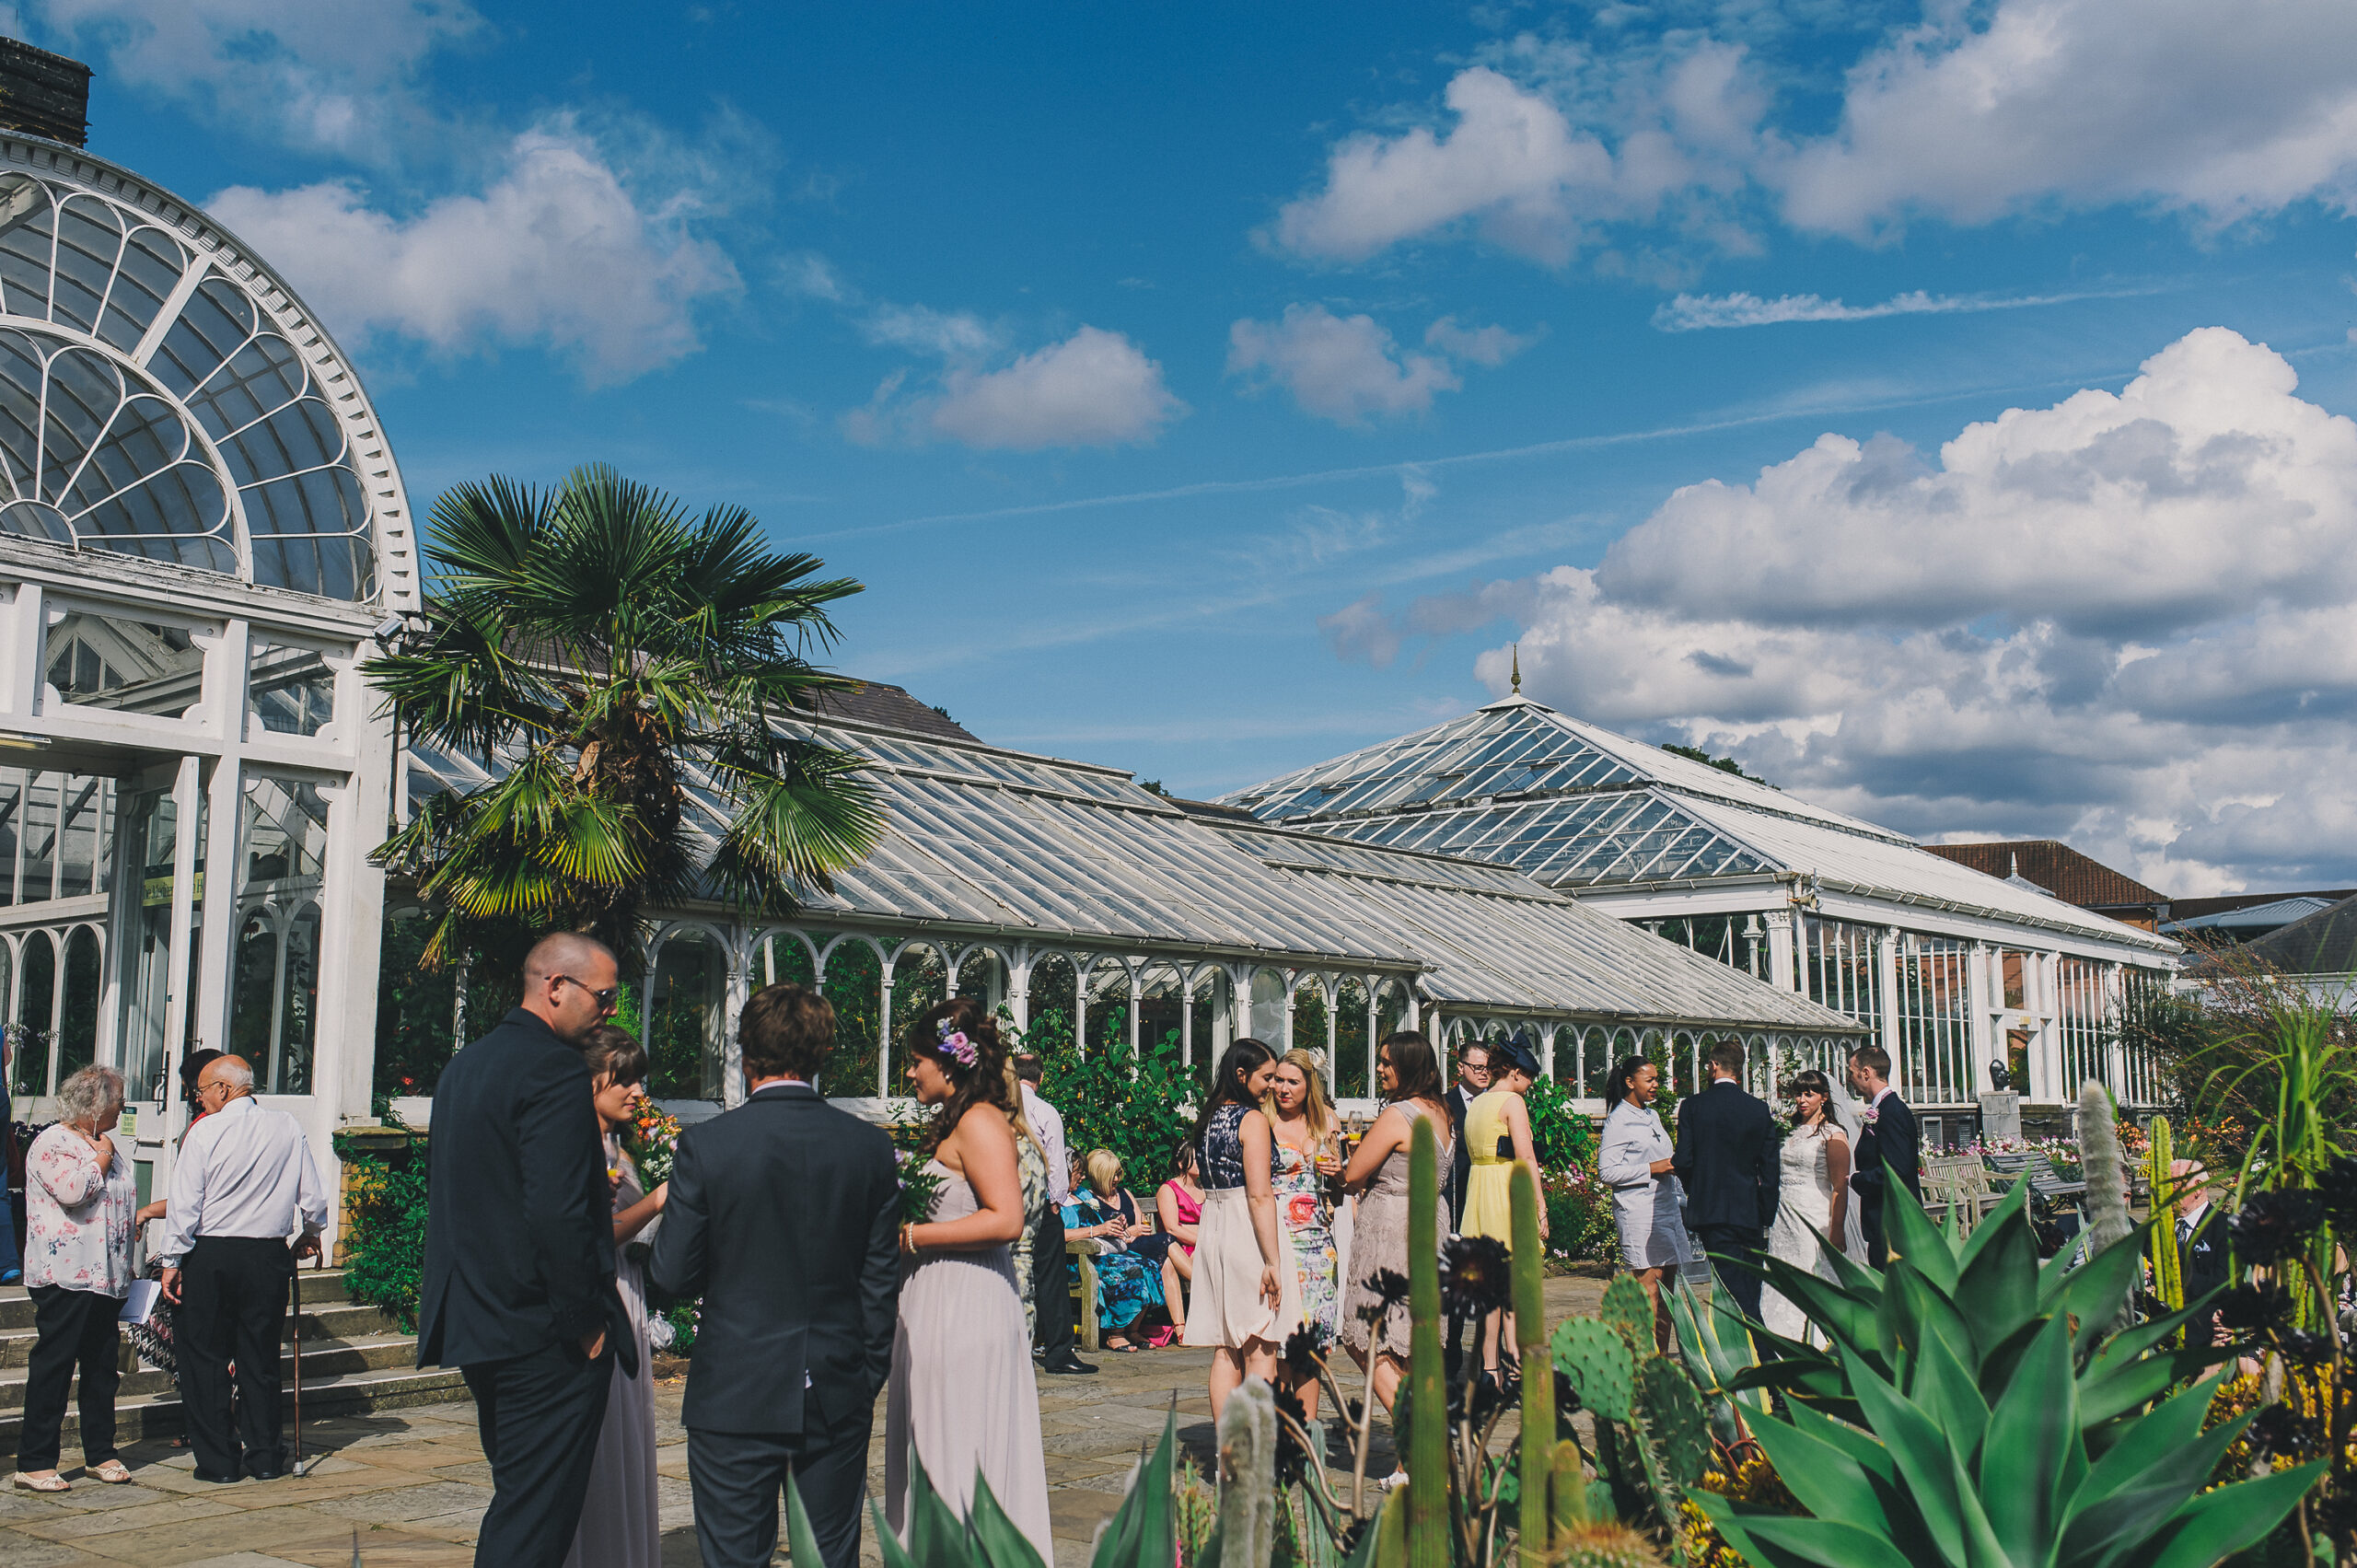 Birmingham Botanical Gardens wedding venue in the West Midlands